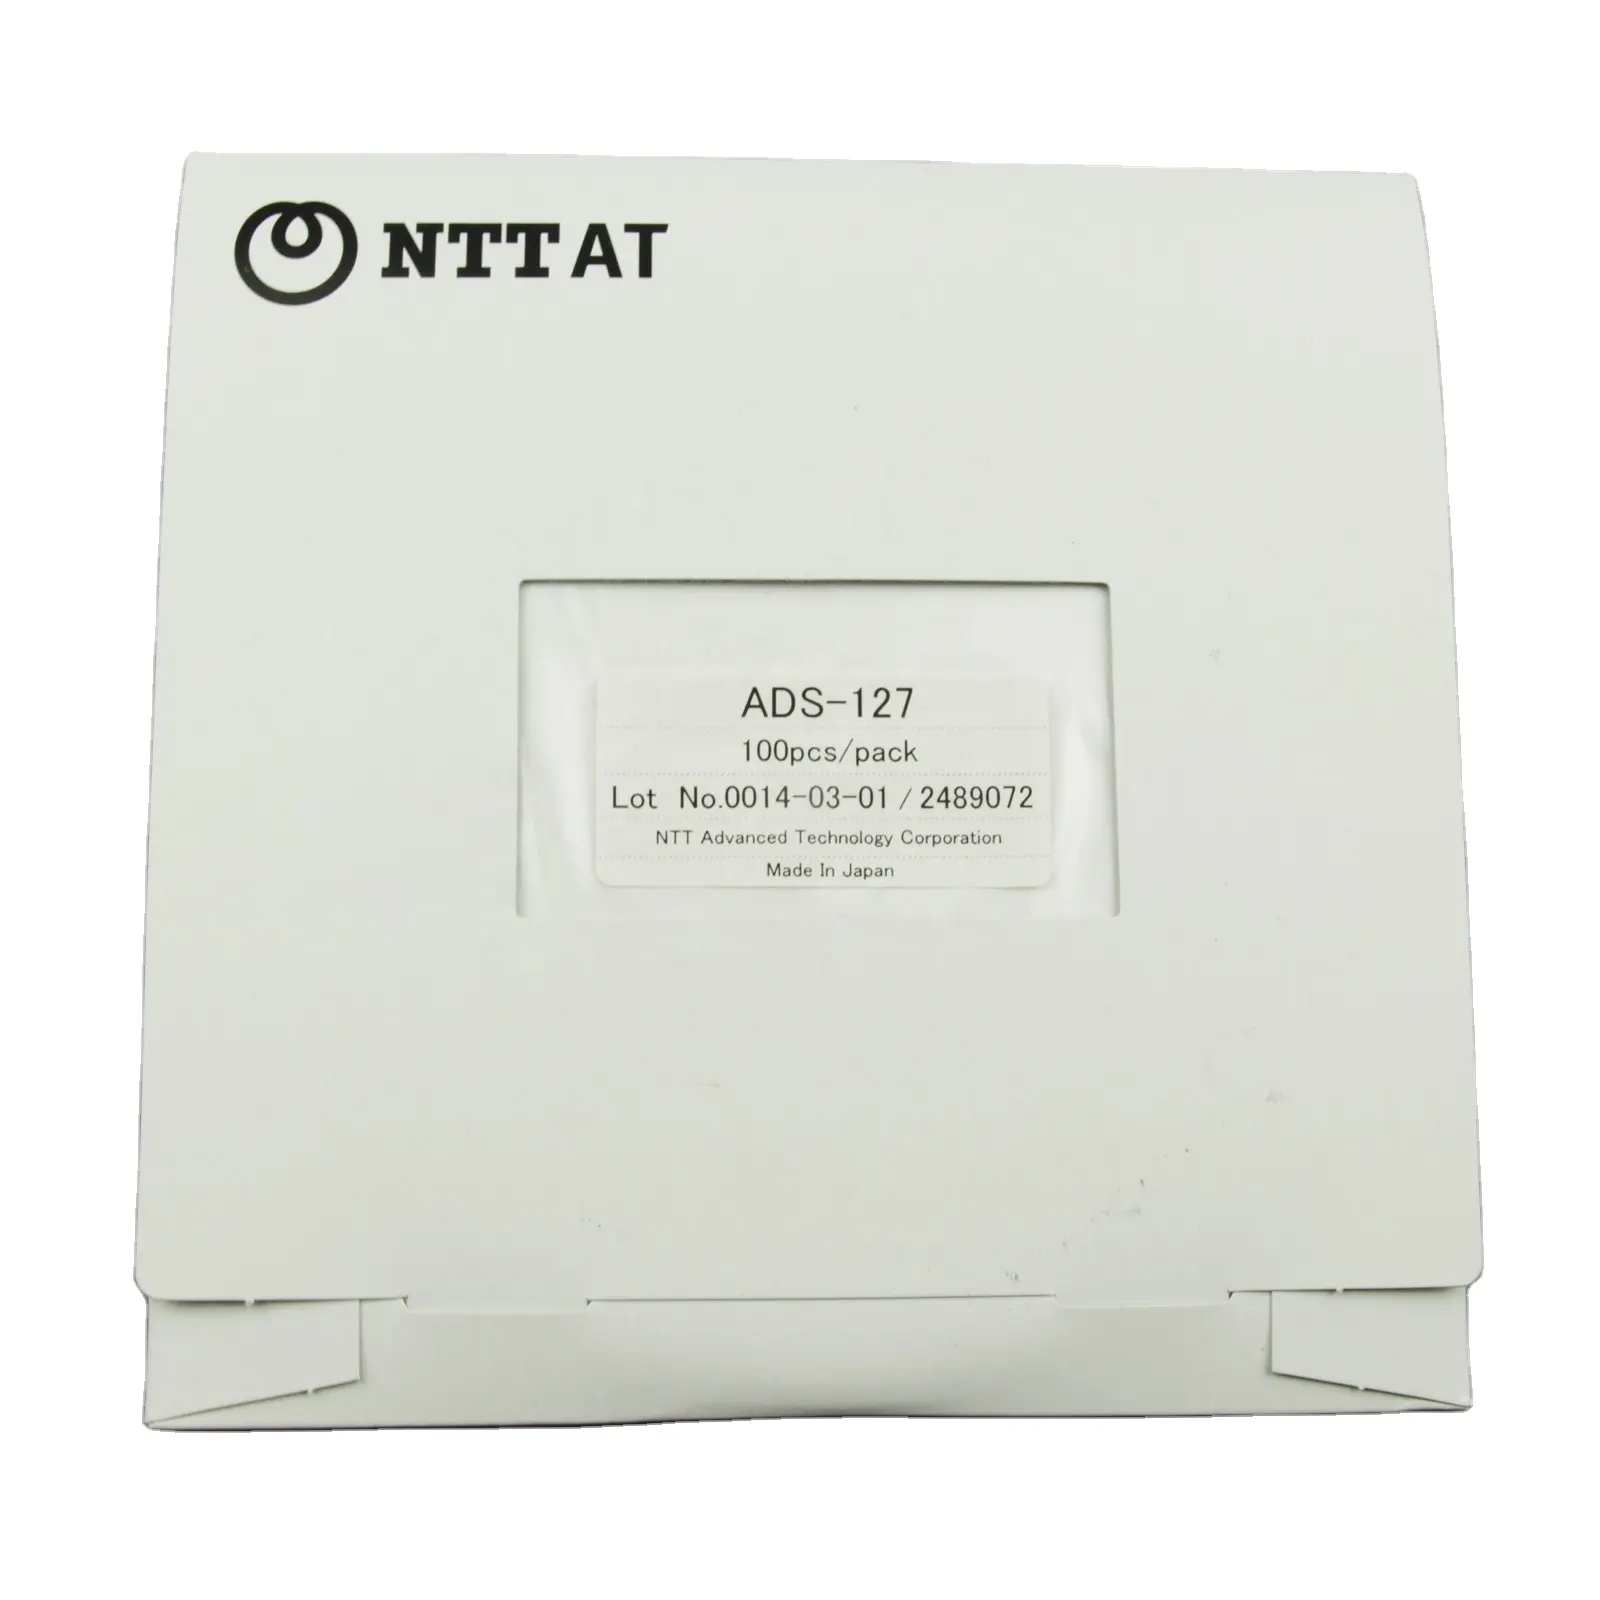 NTT ADS 광섬유 최종 연마 종이 광섬유 광택 랩핑 필름 이산화 규소 ADS-127